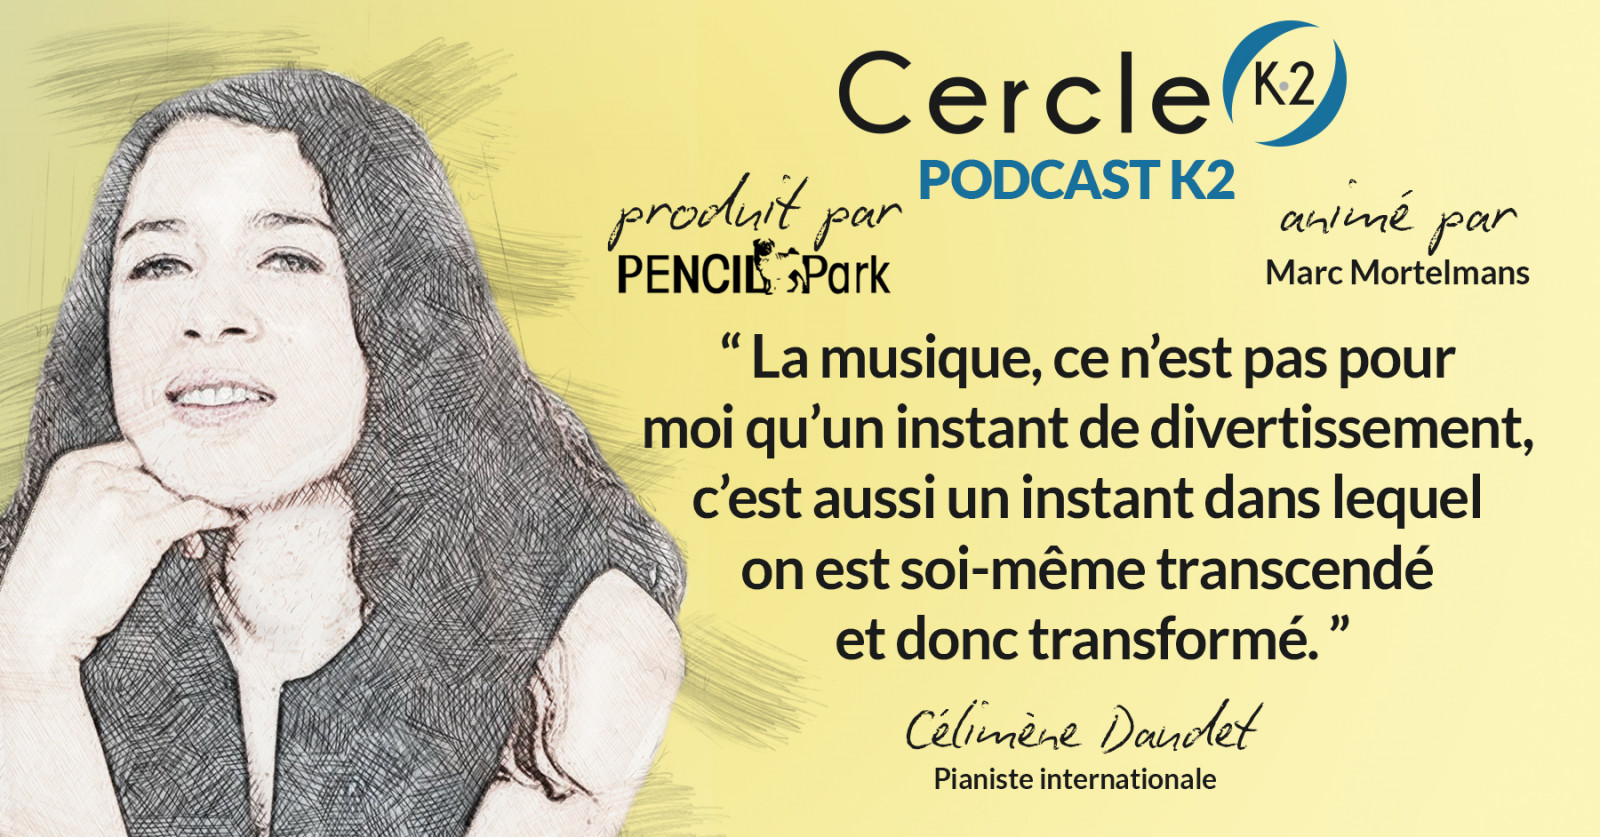 [Podcast K2] Episode 04 - Célimène Daudet - Cercle K2